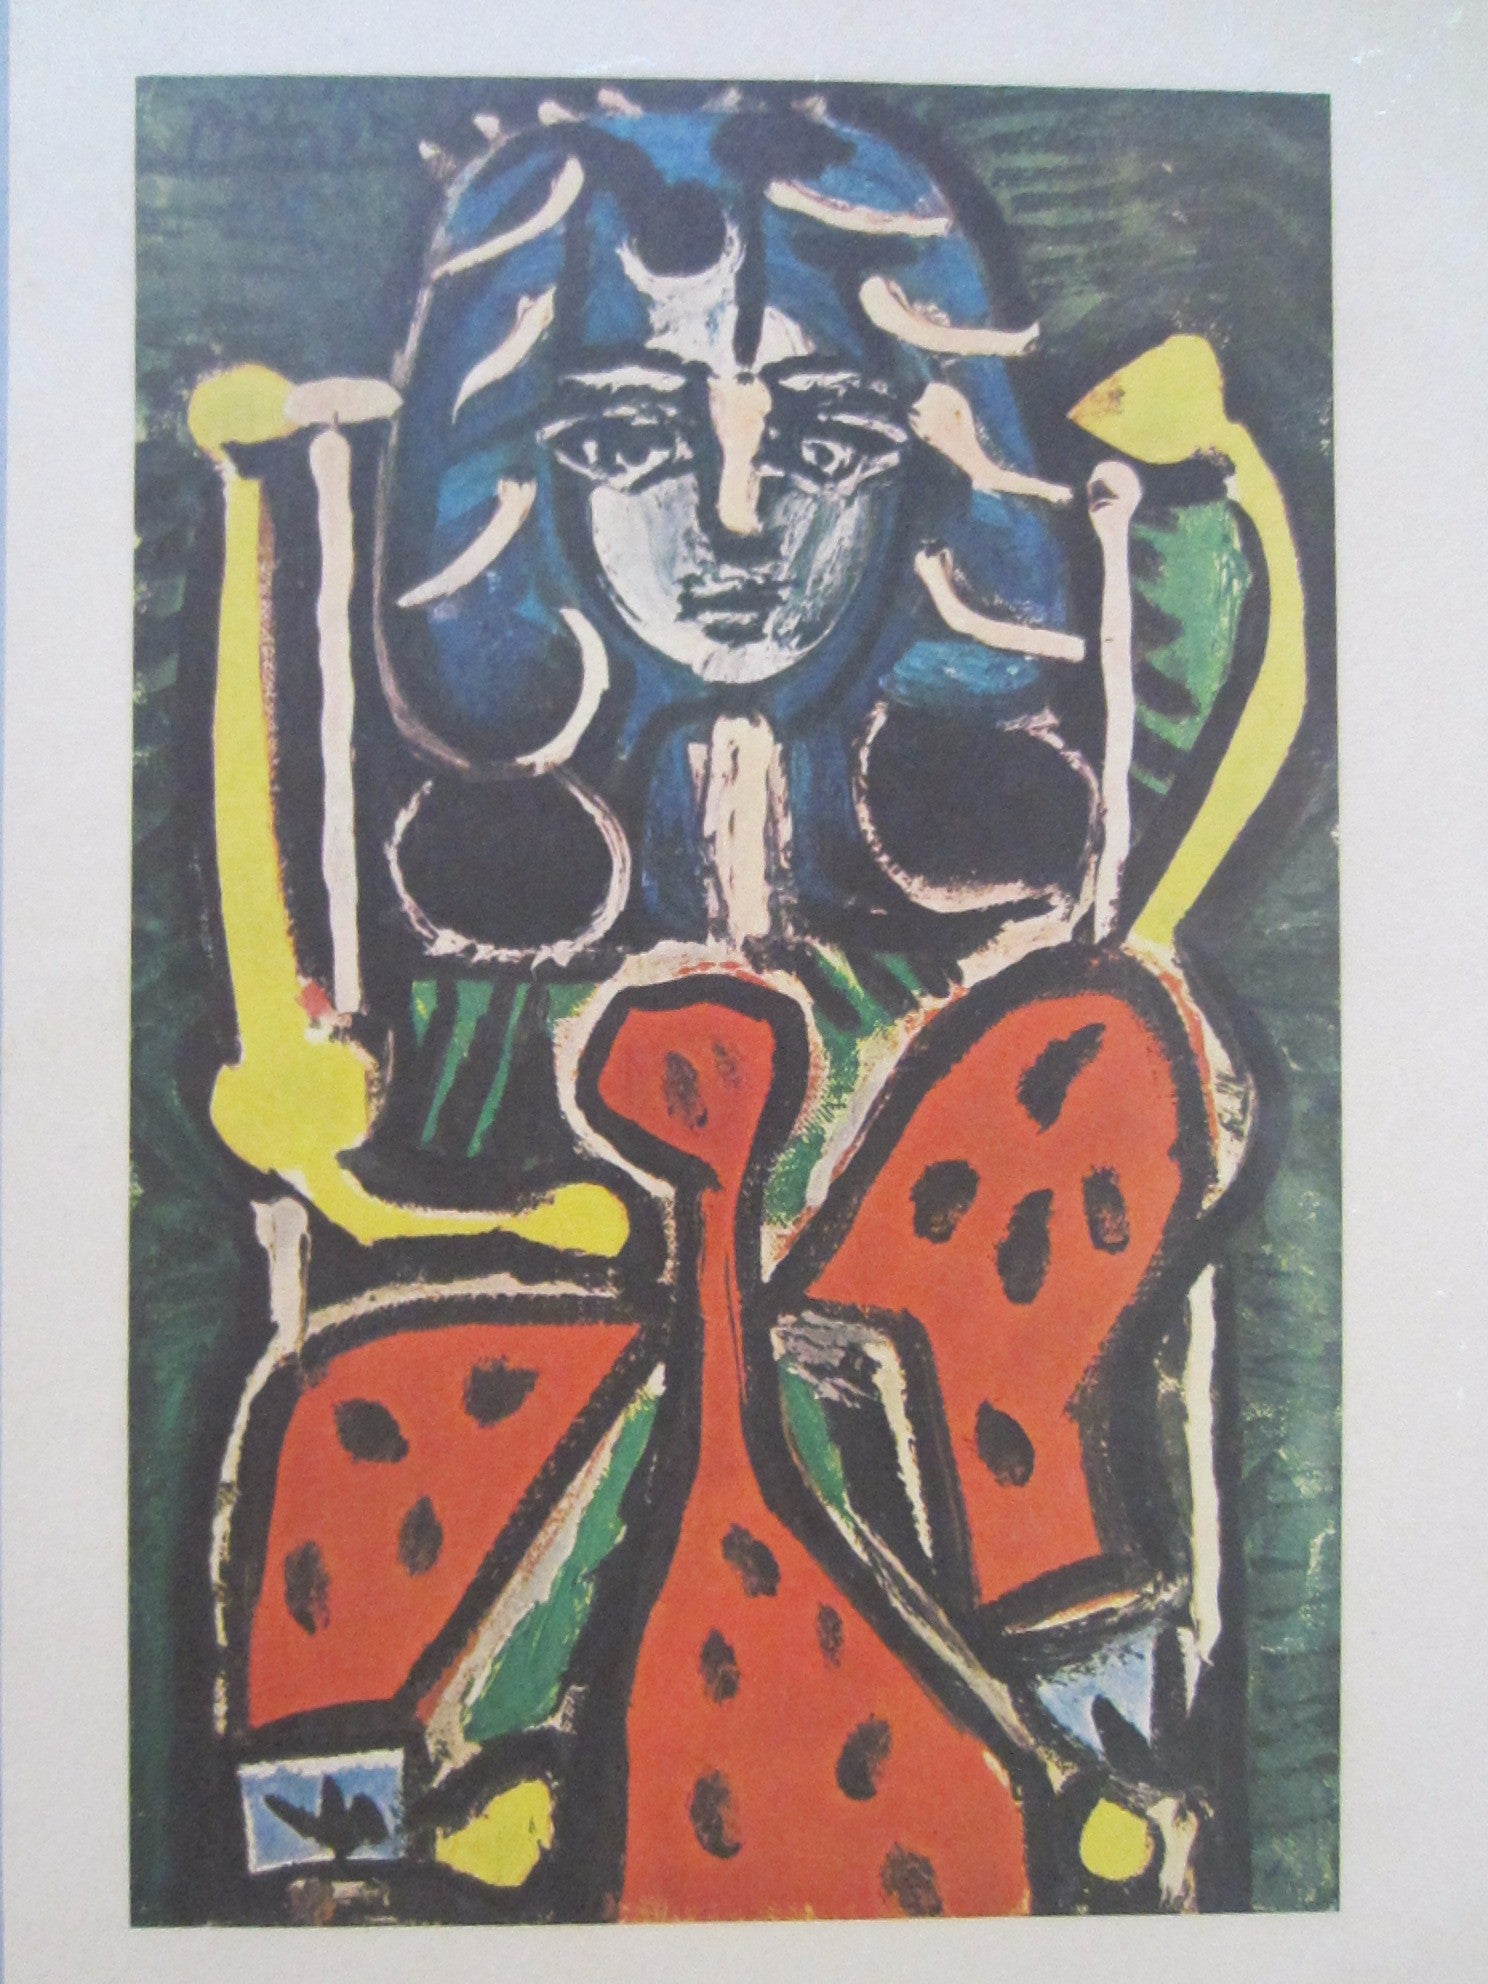 Picasso Mid Century Exhibition Poster Art Museum Quality - Designer Unique Finds 